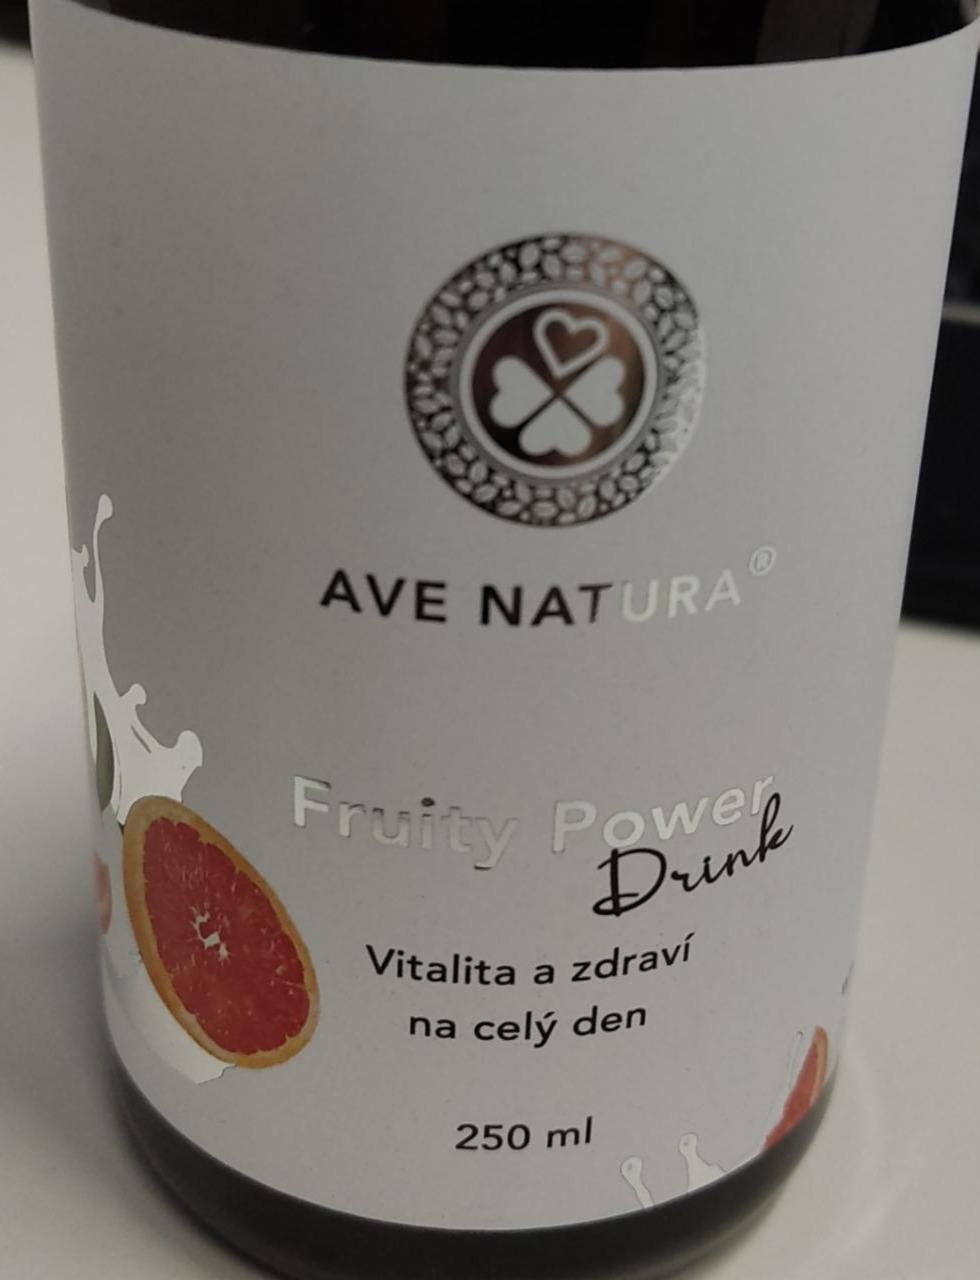 Fotografie - Fruity Power Drink Ave Natura